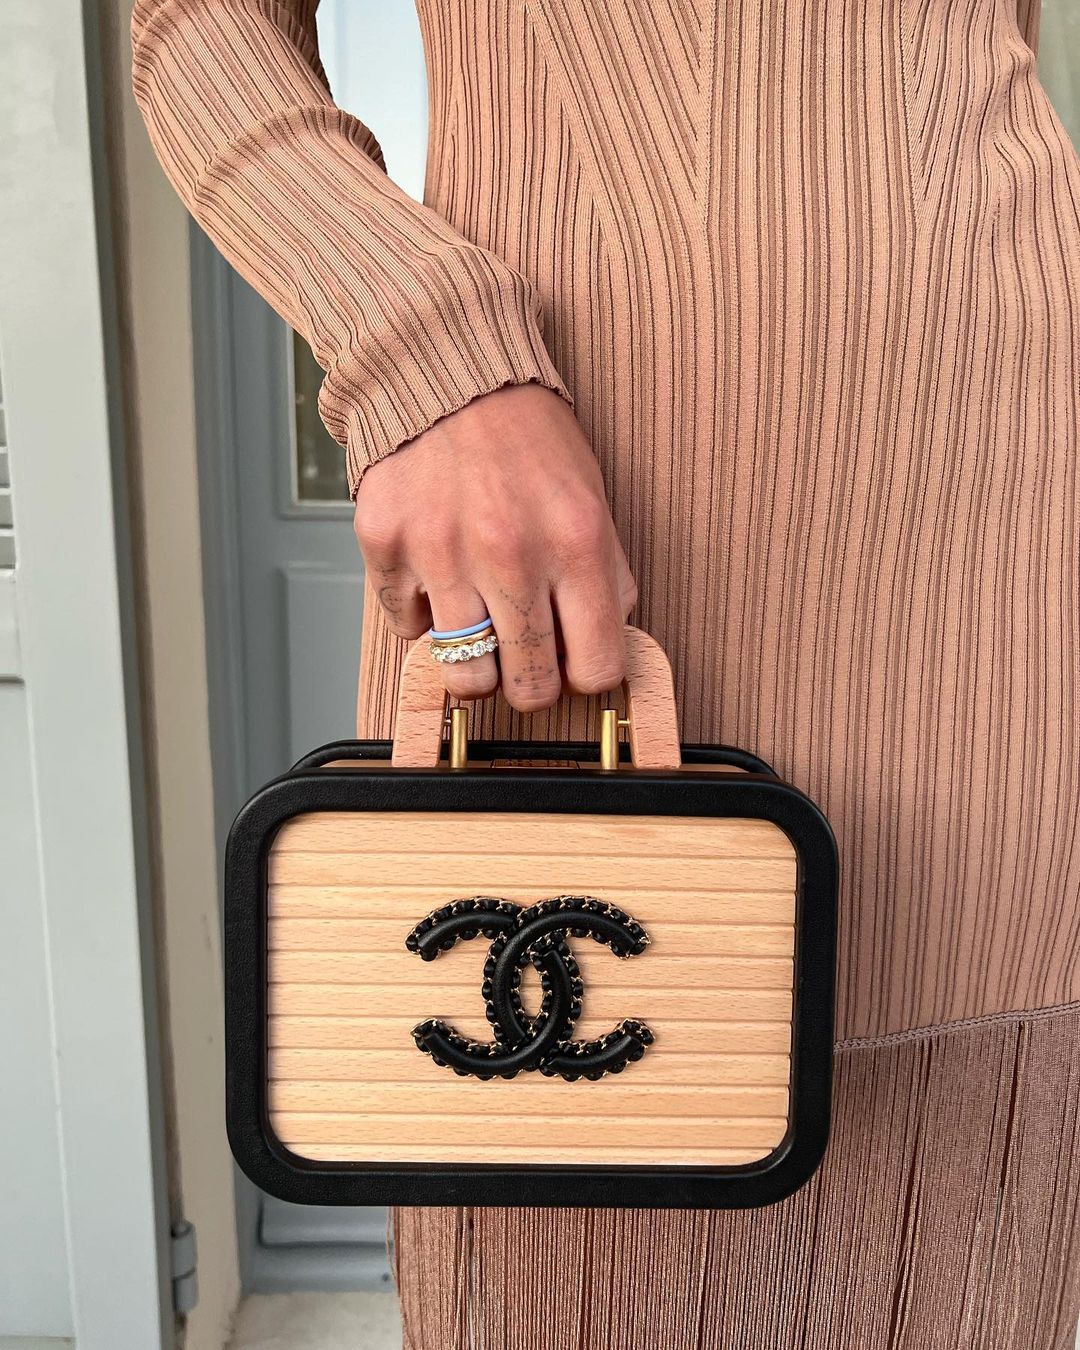 This is the £1,910 'Quiet Luxury' handbag Sofia Richie wears on